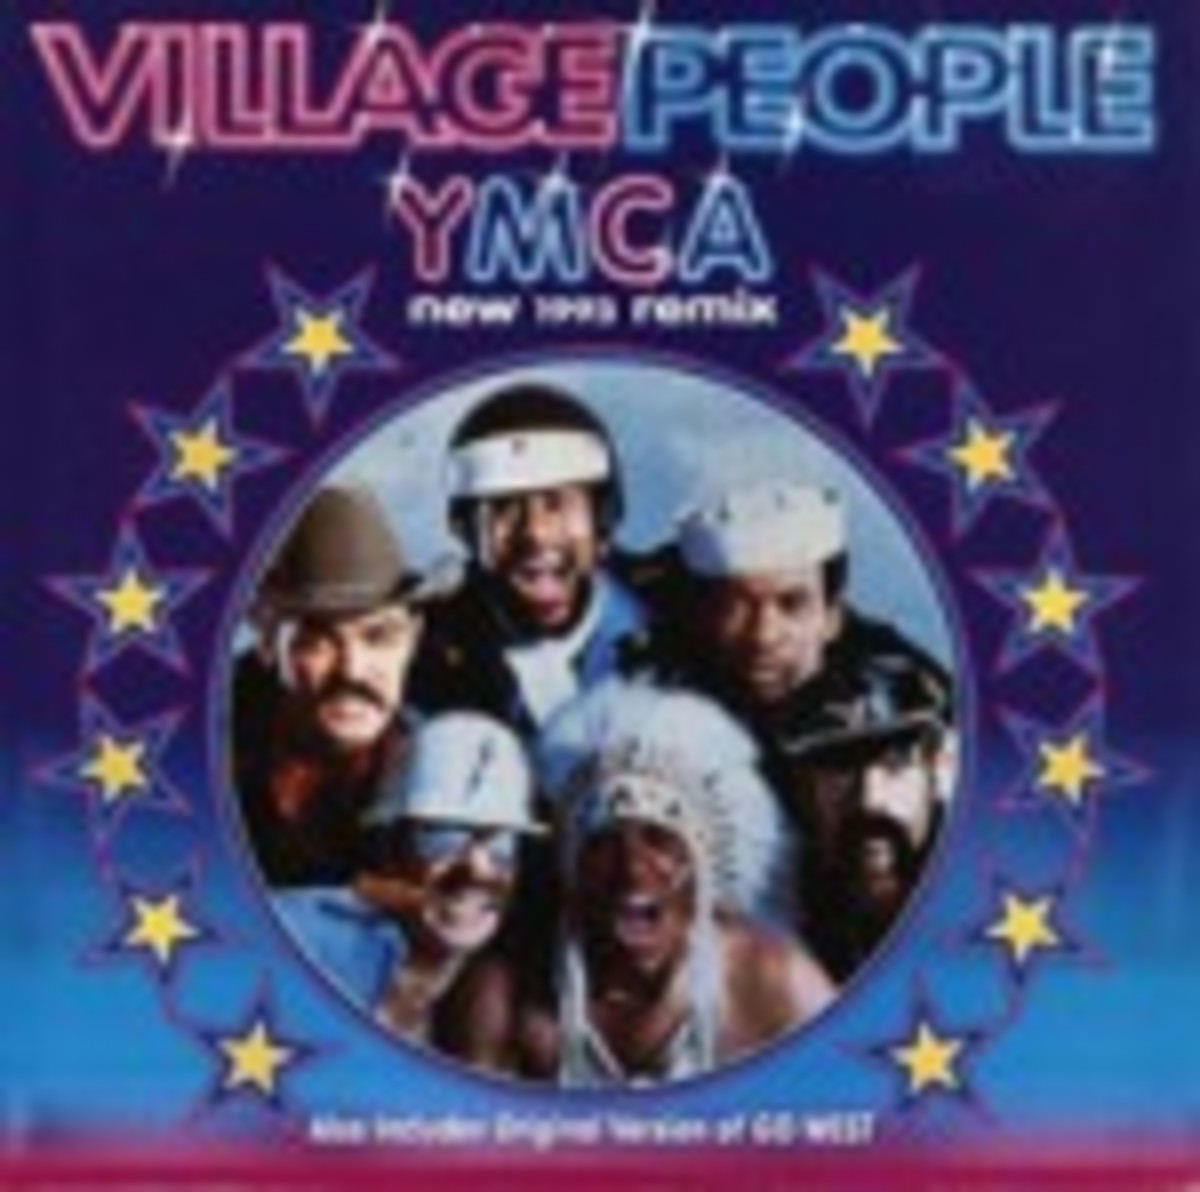 Village People YMCA